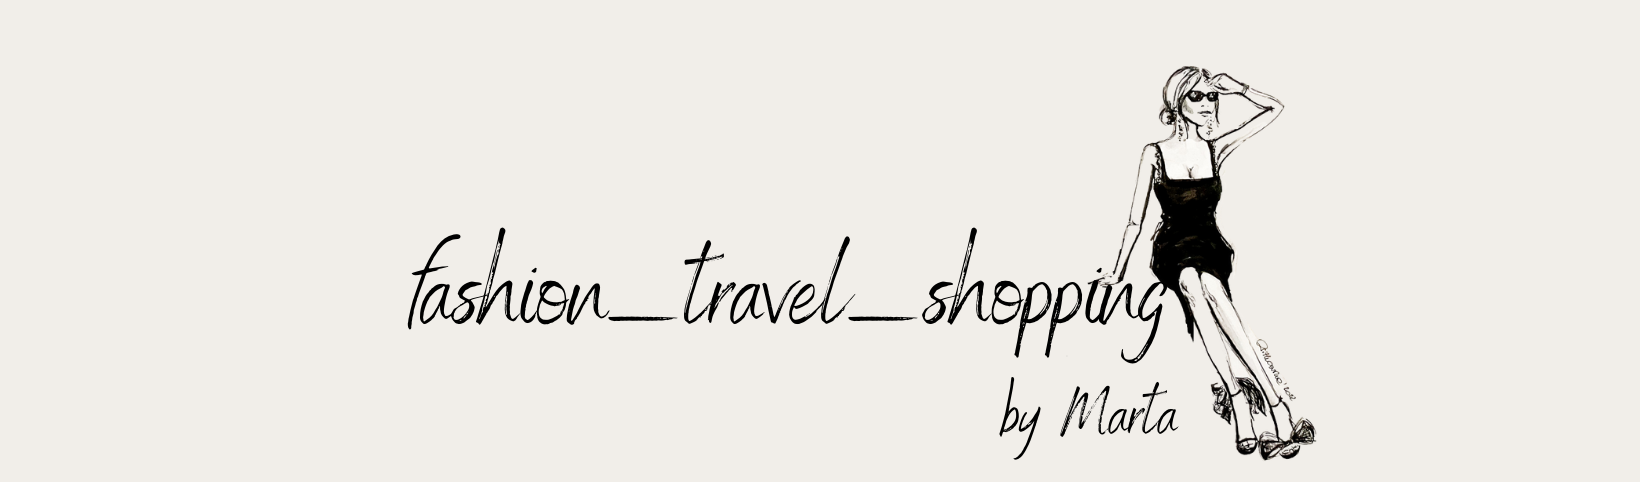 fashion_travel_shopping by Marta